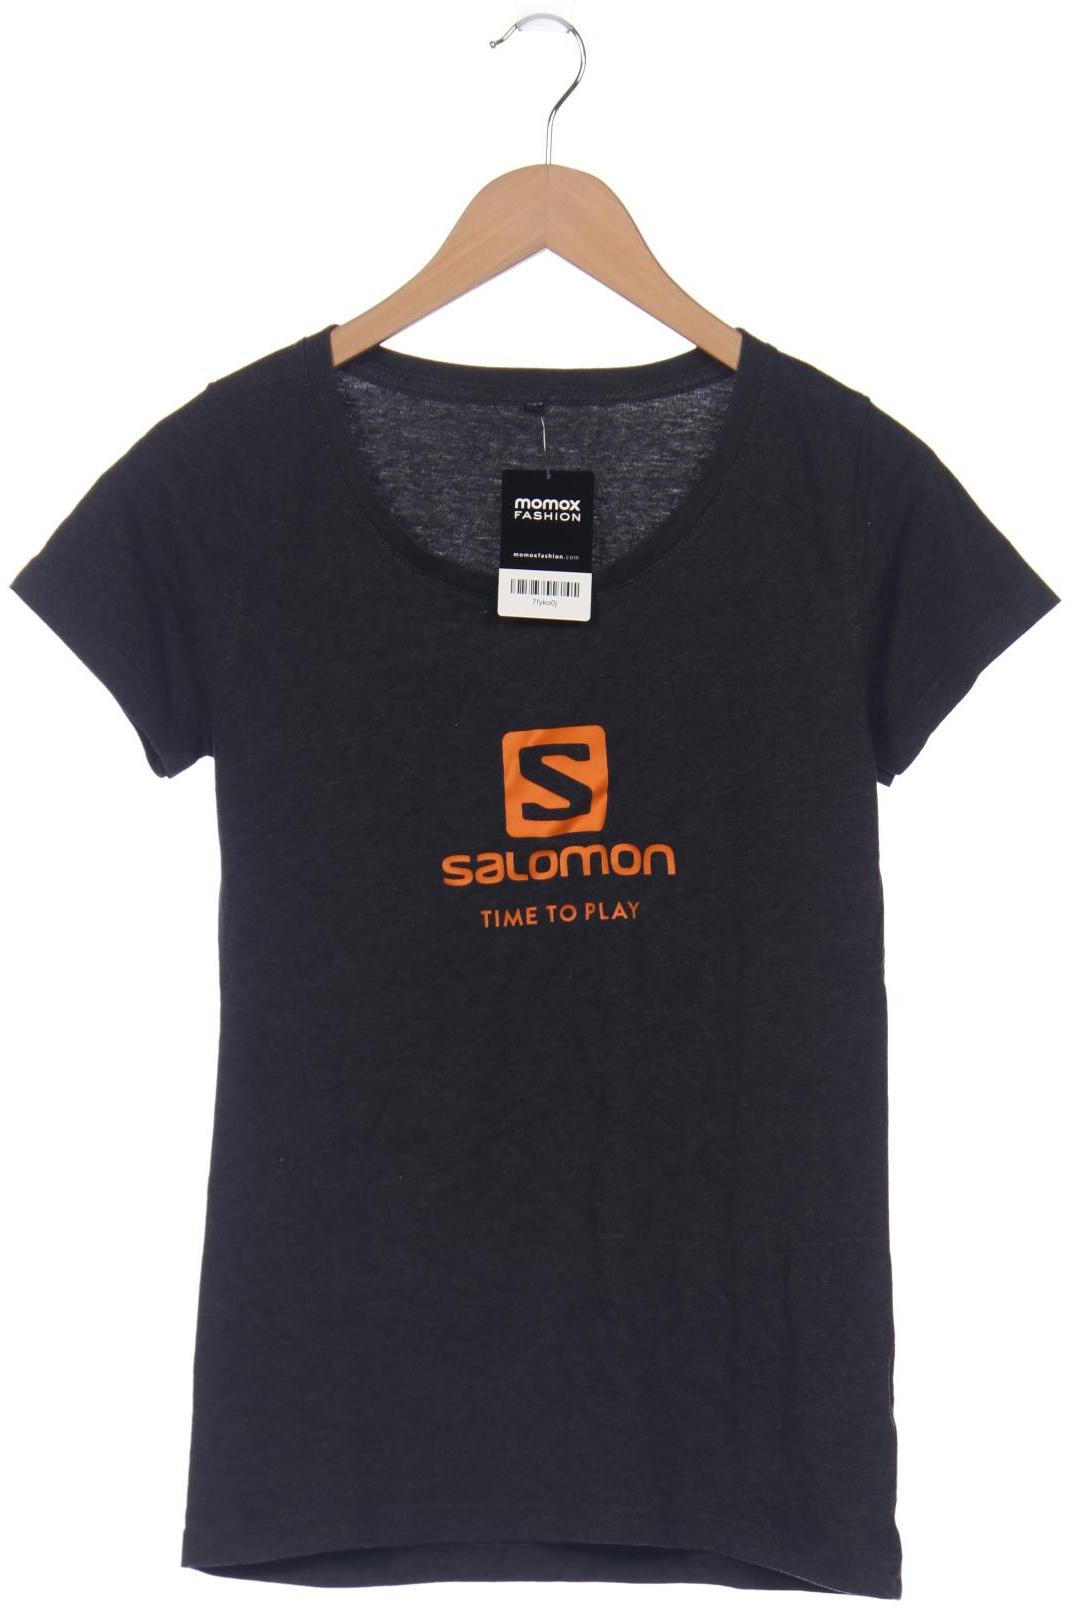 Salomon Damen T-Shirt, grau, Gr. 38 von Salomon